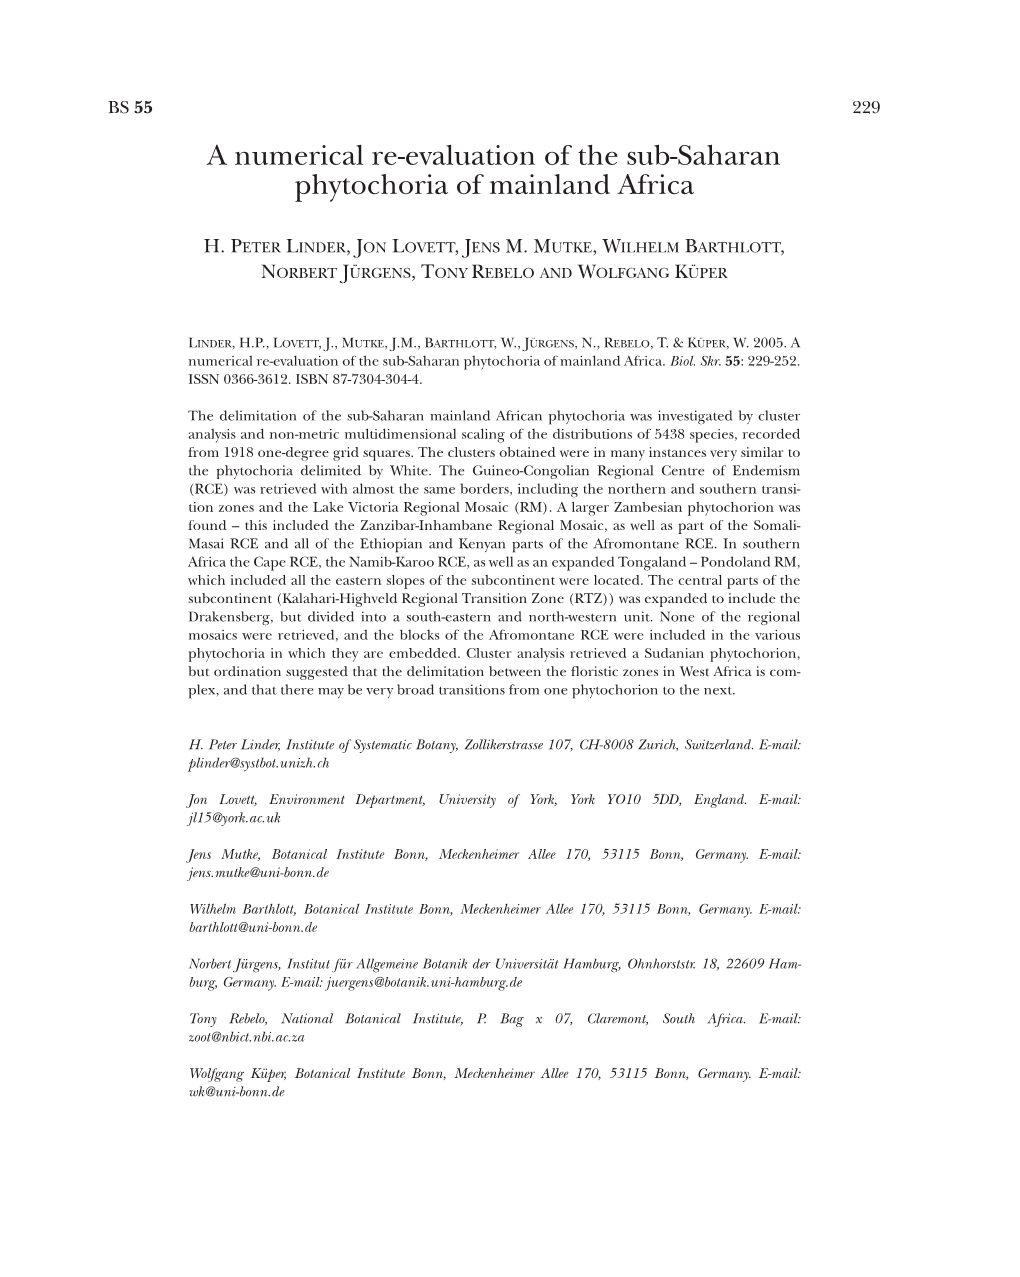 A Numerical Re-Evaluation of the Sub-Saharan Phytochoria of Mainland Africa